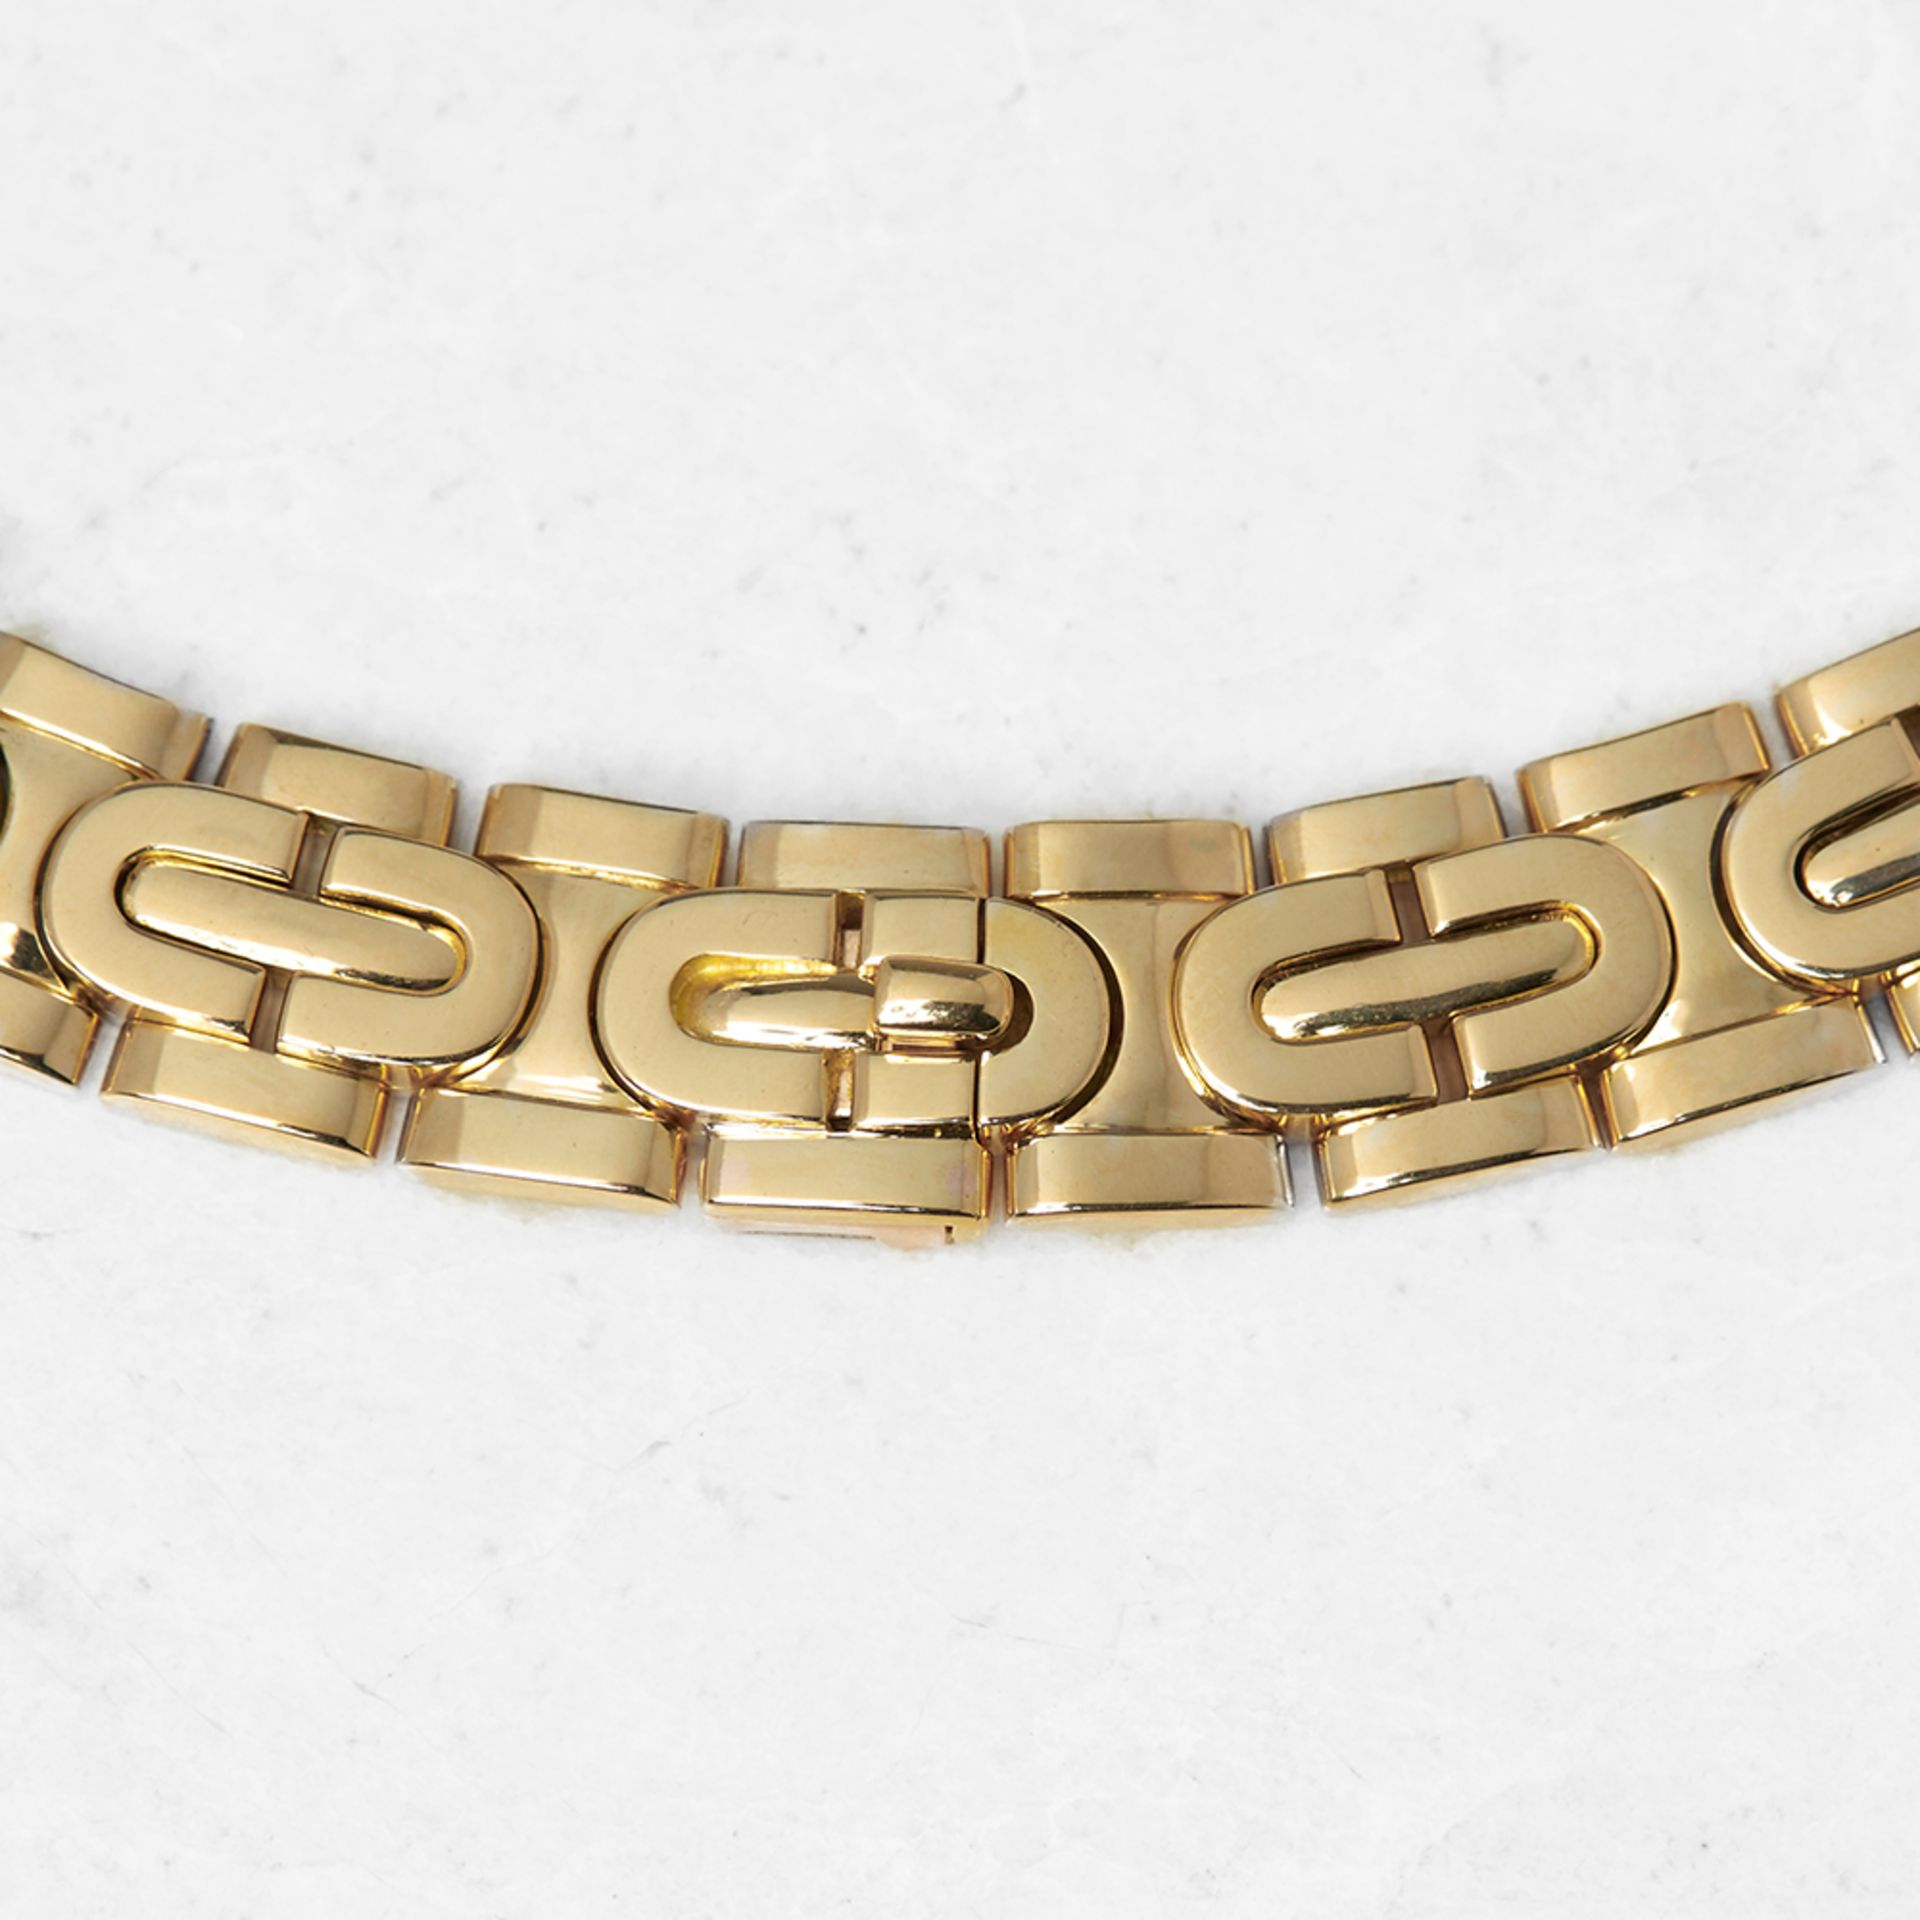 Cartier 18k Yellow Gold Oval Link Collar 0.70ct Diamond Panthre Necklace with Box & Papers - Image 2 of 7